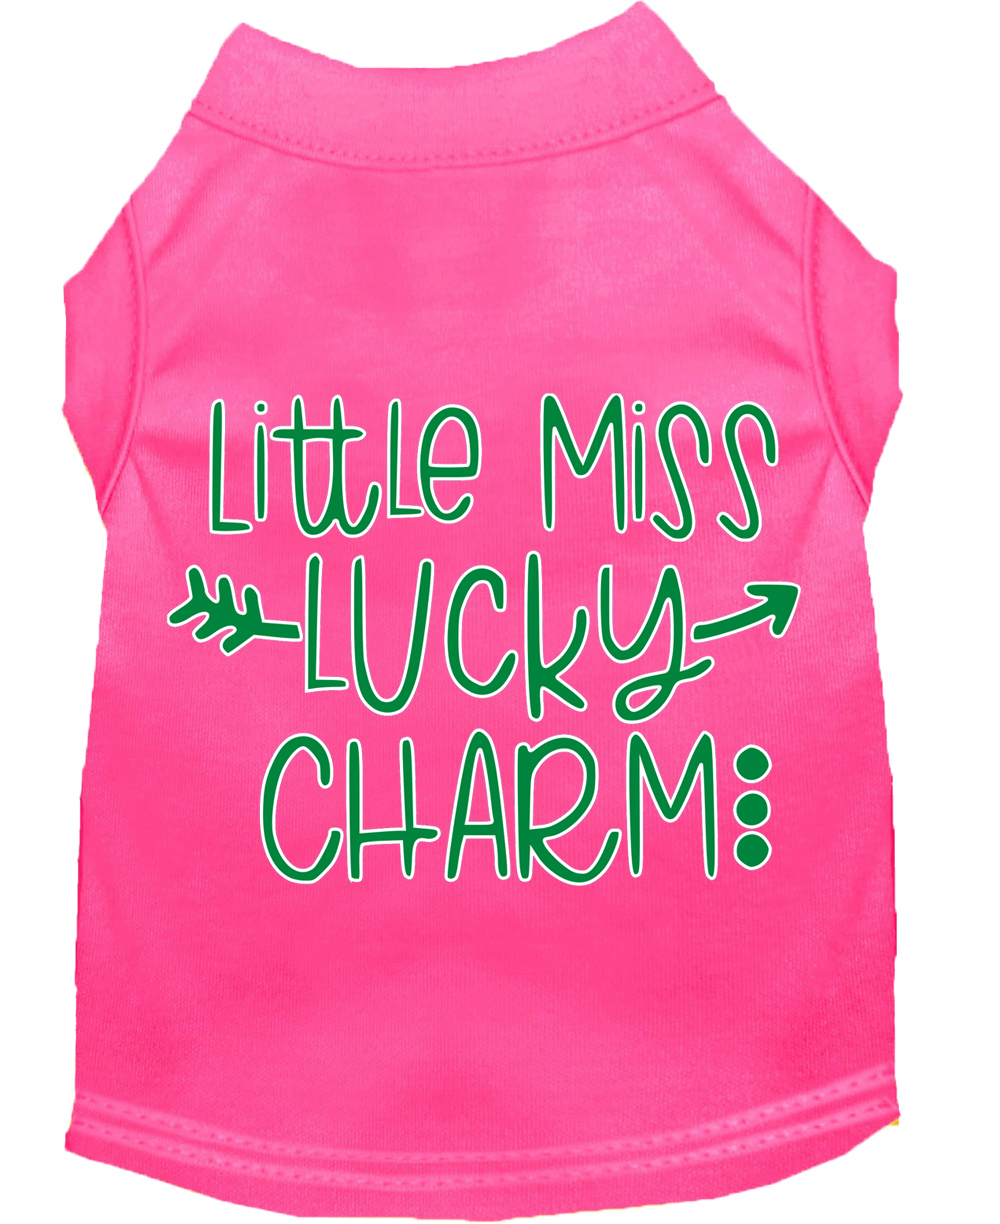 Little Miss Lucky Charm Screen Print Dog Shirt Bright Pink Lg